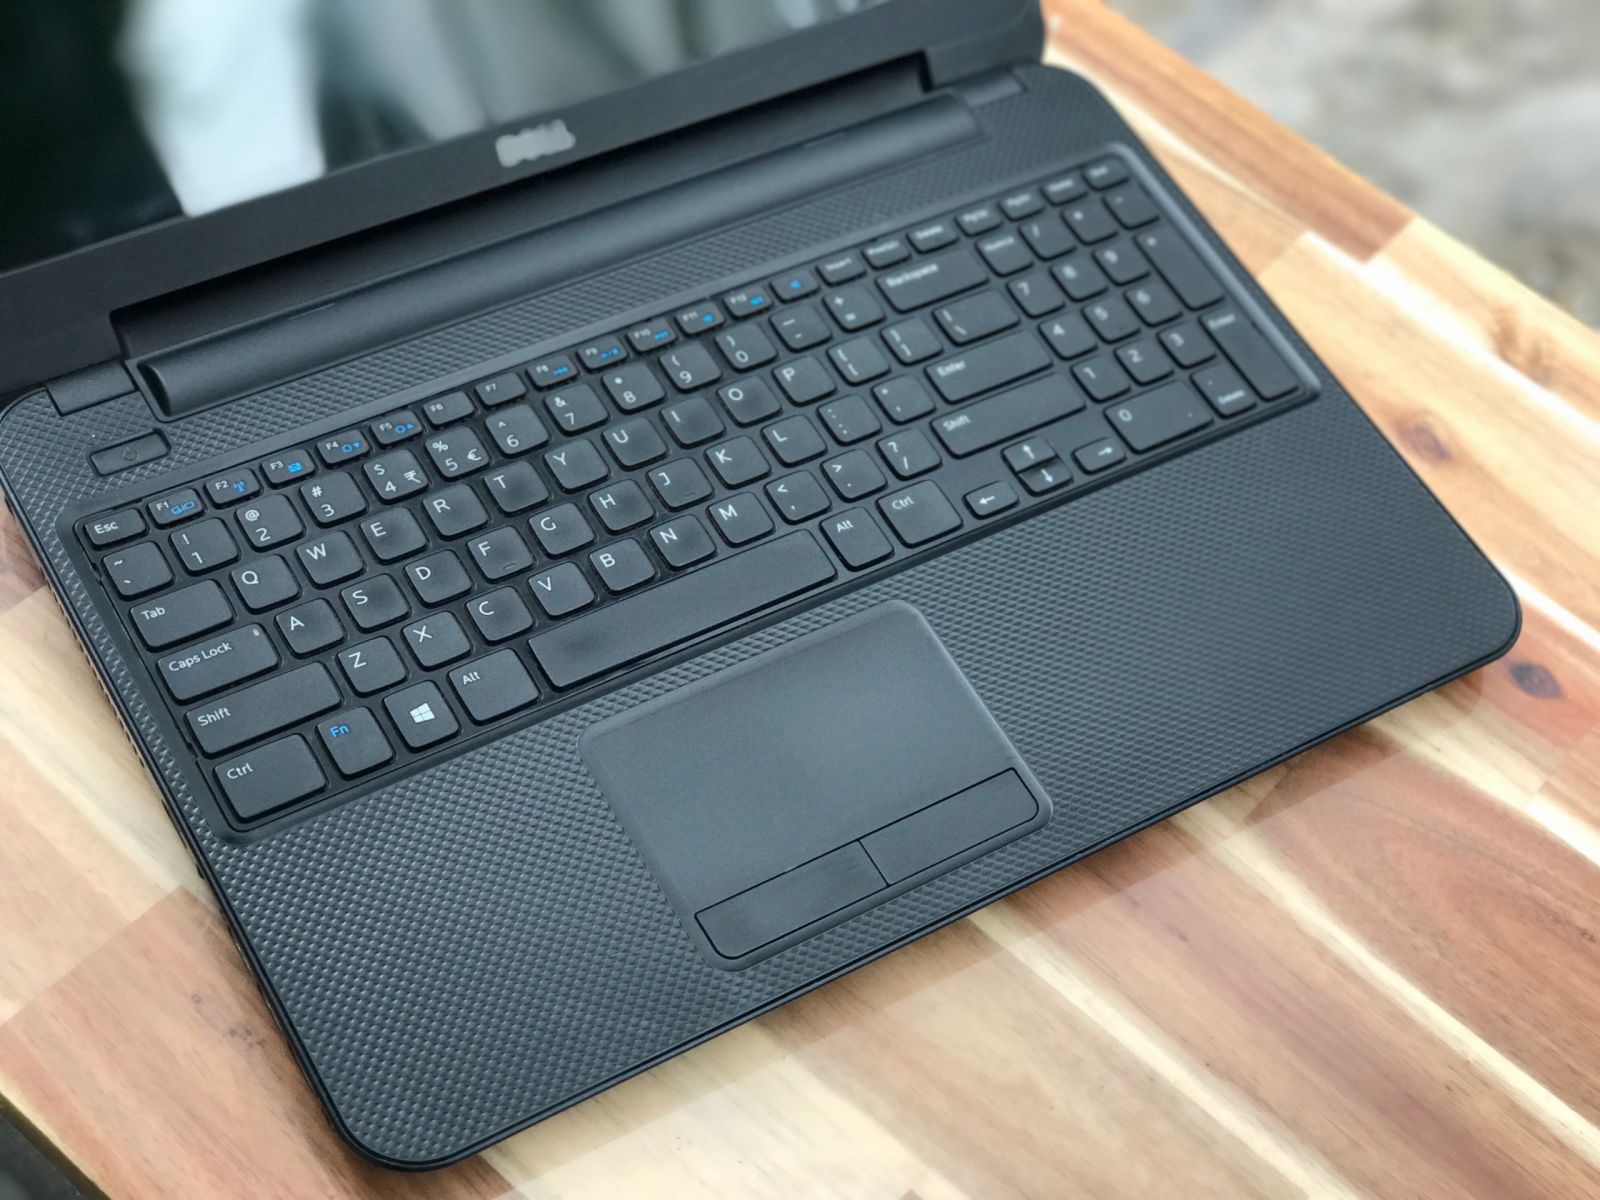 Laptop Dell Inspiron 3537, i5 4200U 4G 500G Like New zin 100% Giá rẻ1